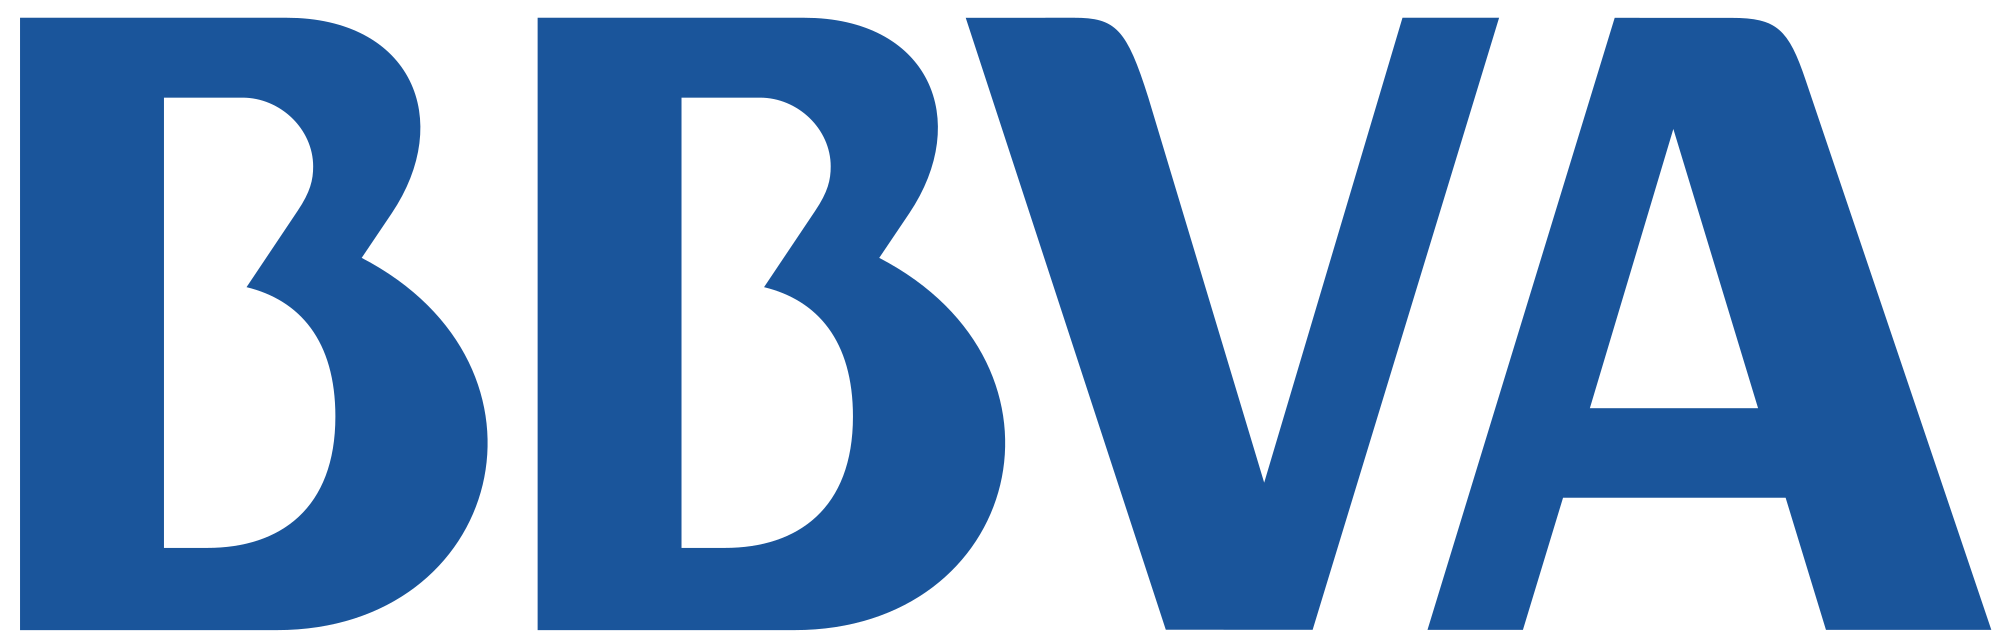 BBVA Logo - File:Logotipo de BBVA.svg - Wikimedia Commons